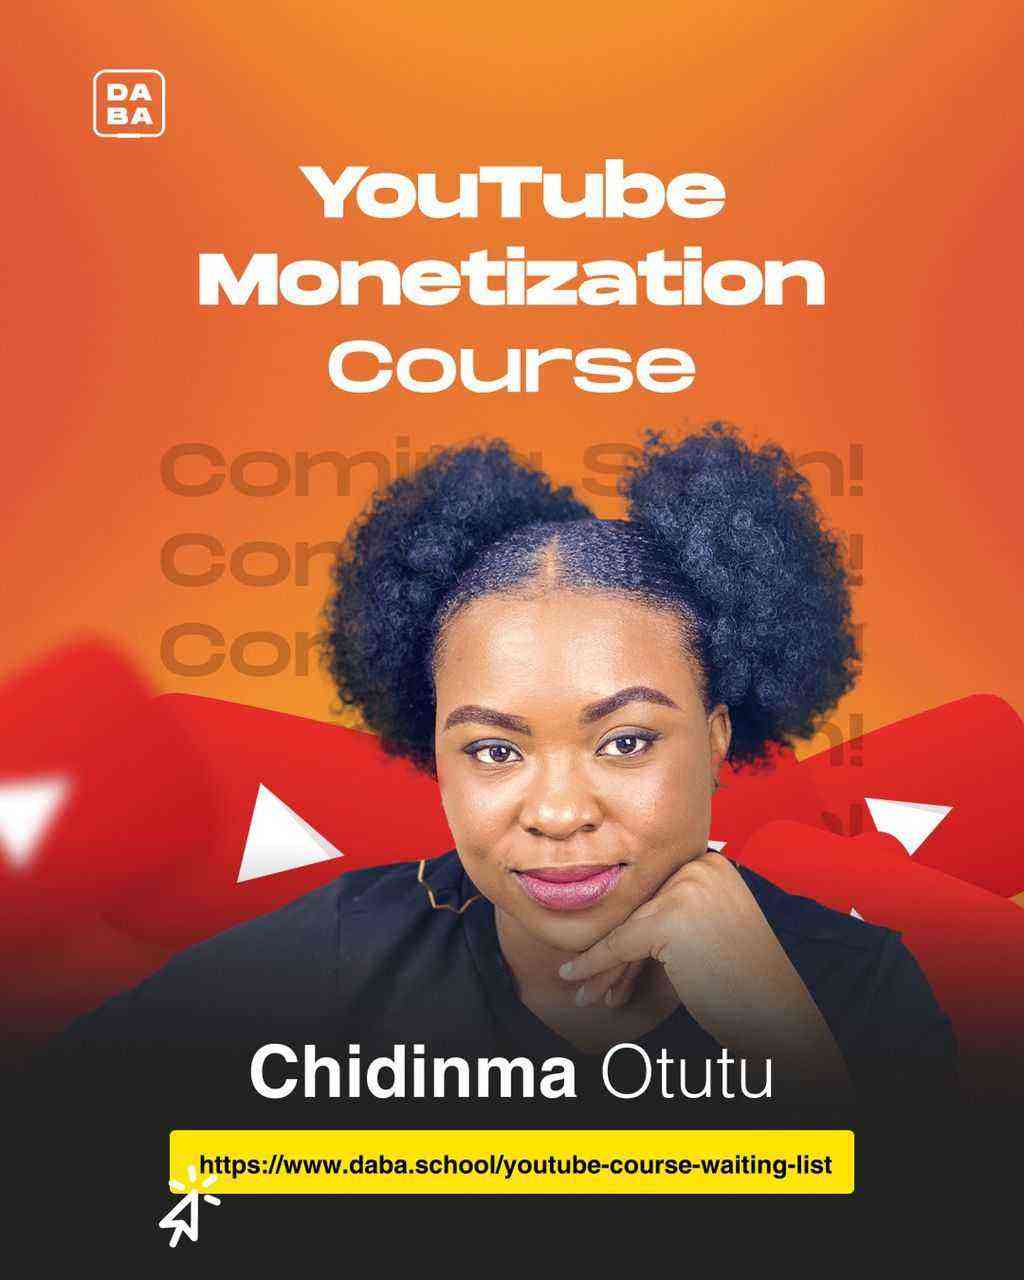 youtube monetization course by chidinma otutu 02